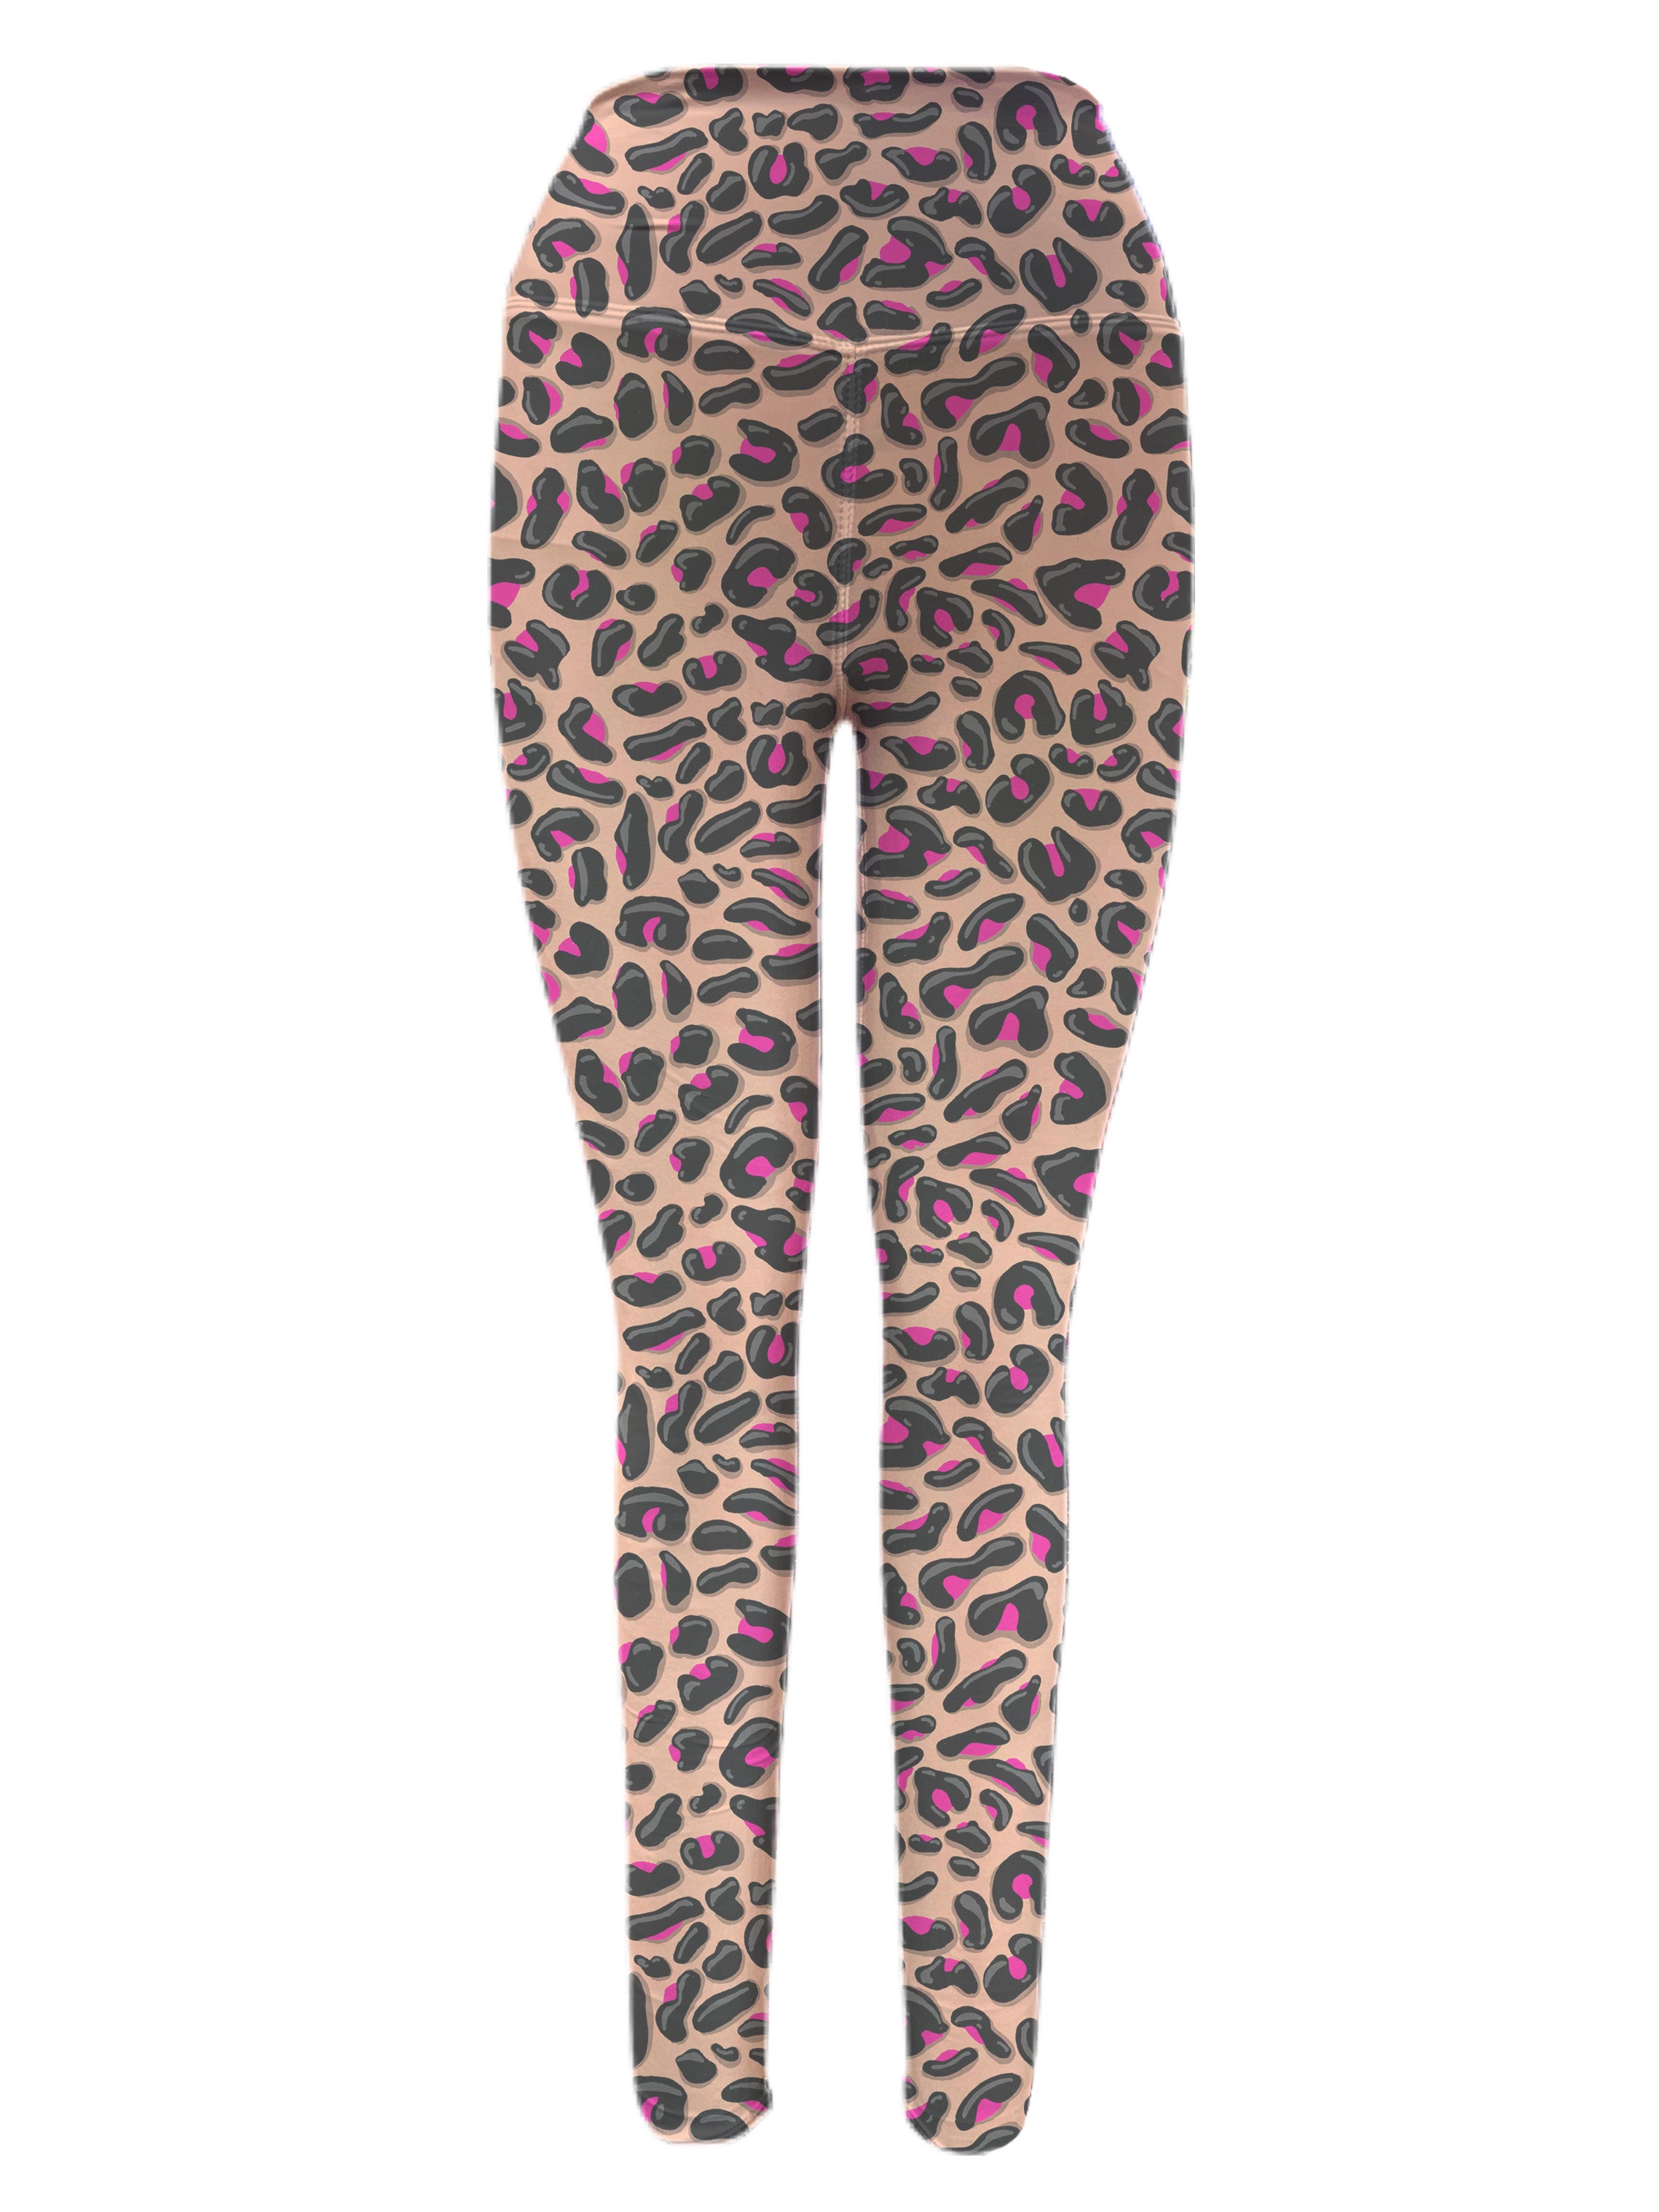 Pink Leopard Print  Leggings for Sale by newburyboutique